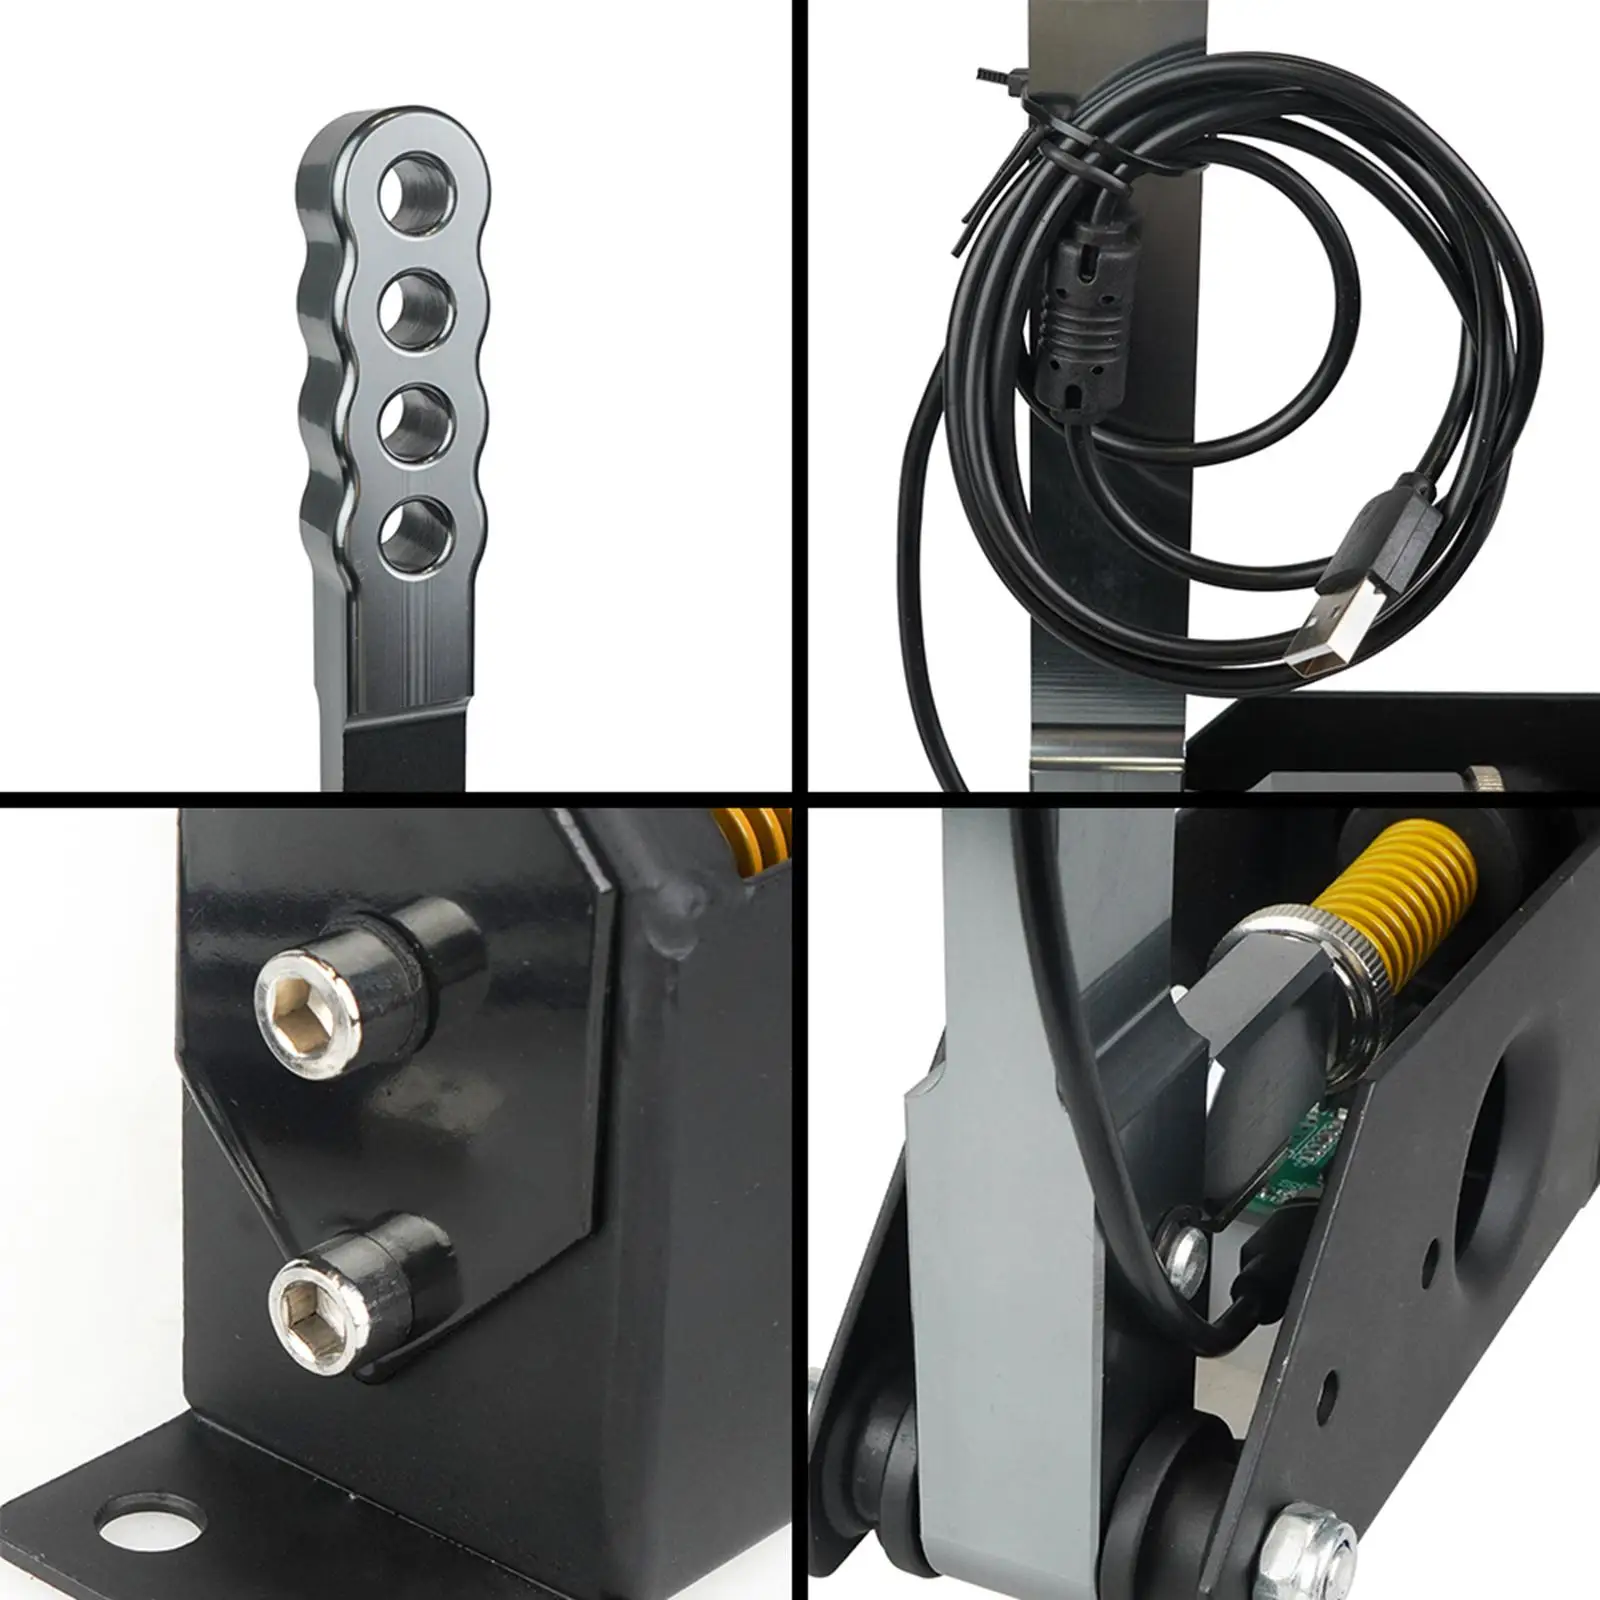 Brake System Handbrake Hall Sensor Spare Parts Anti Wear Easy to Install Long Service Life for Logitech G29